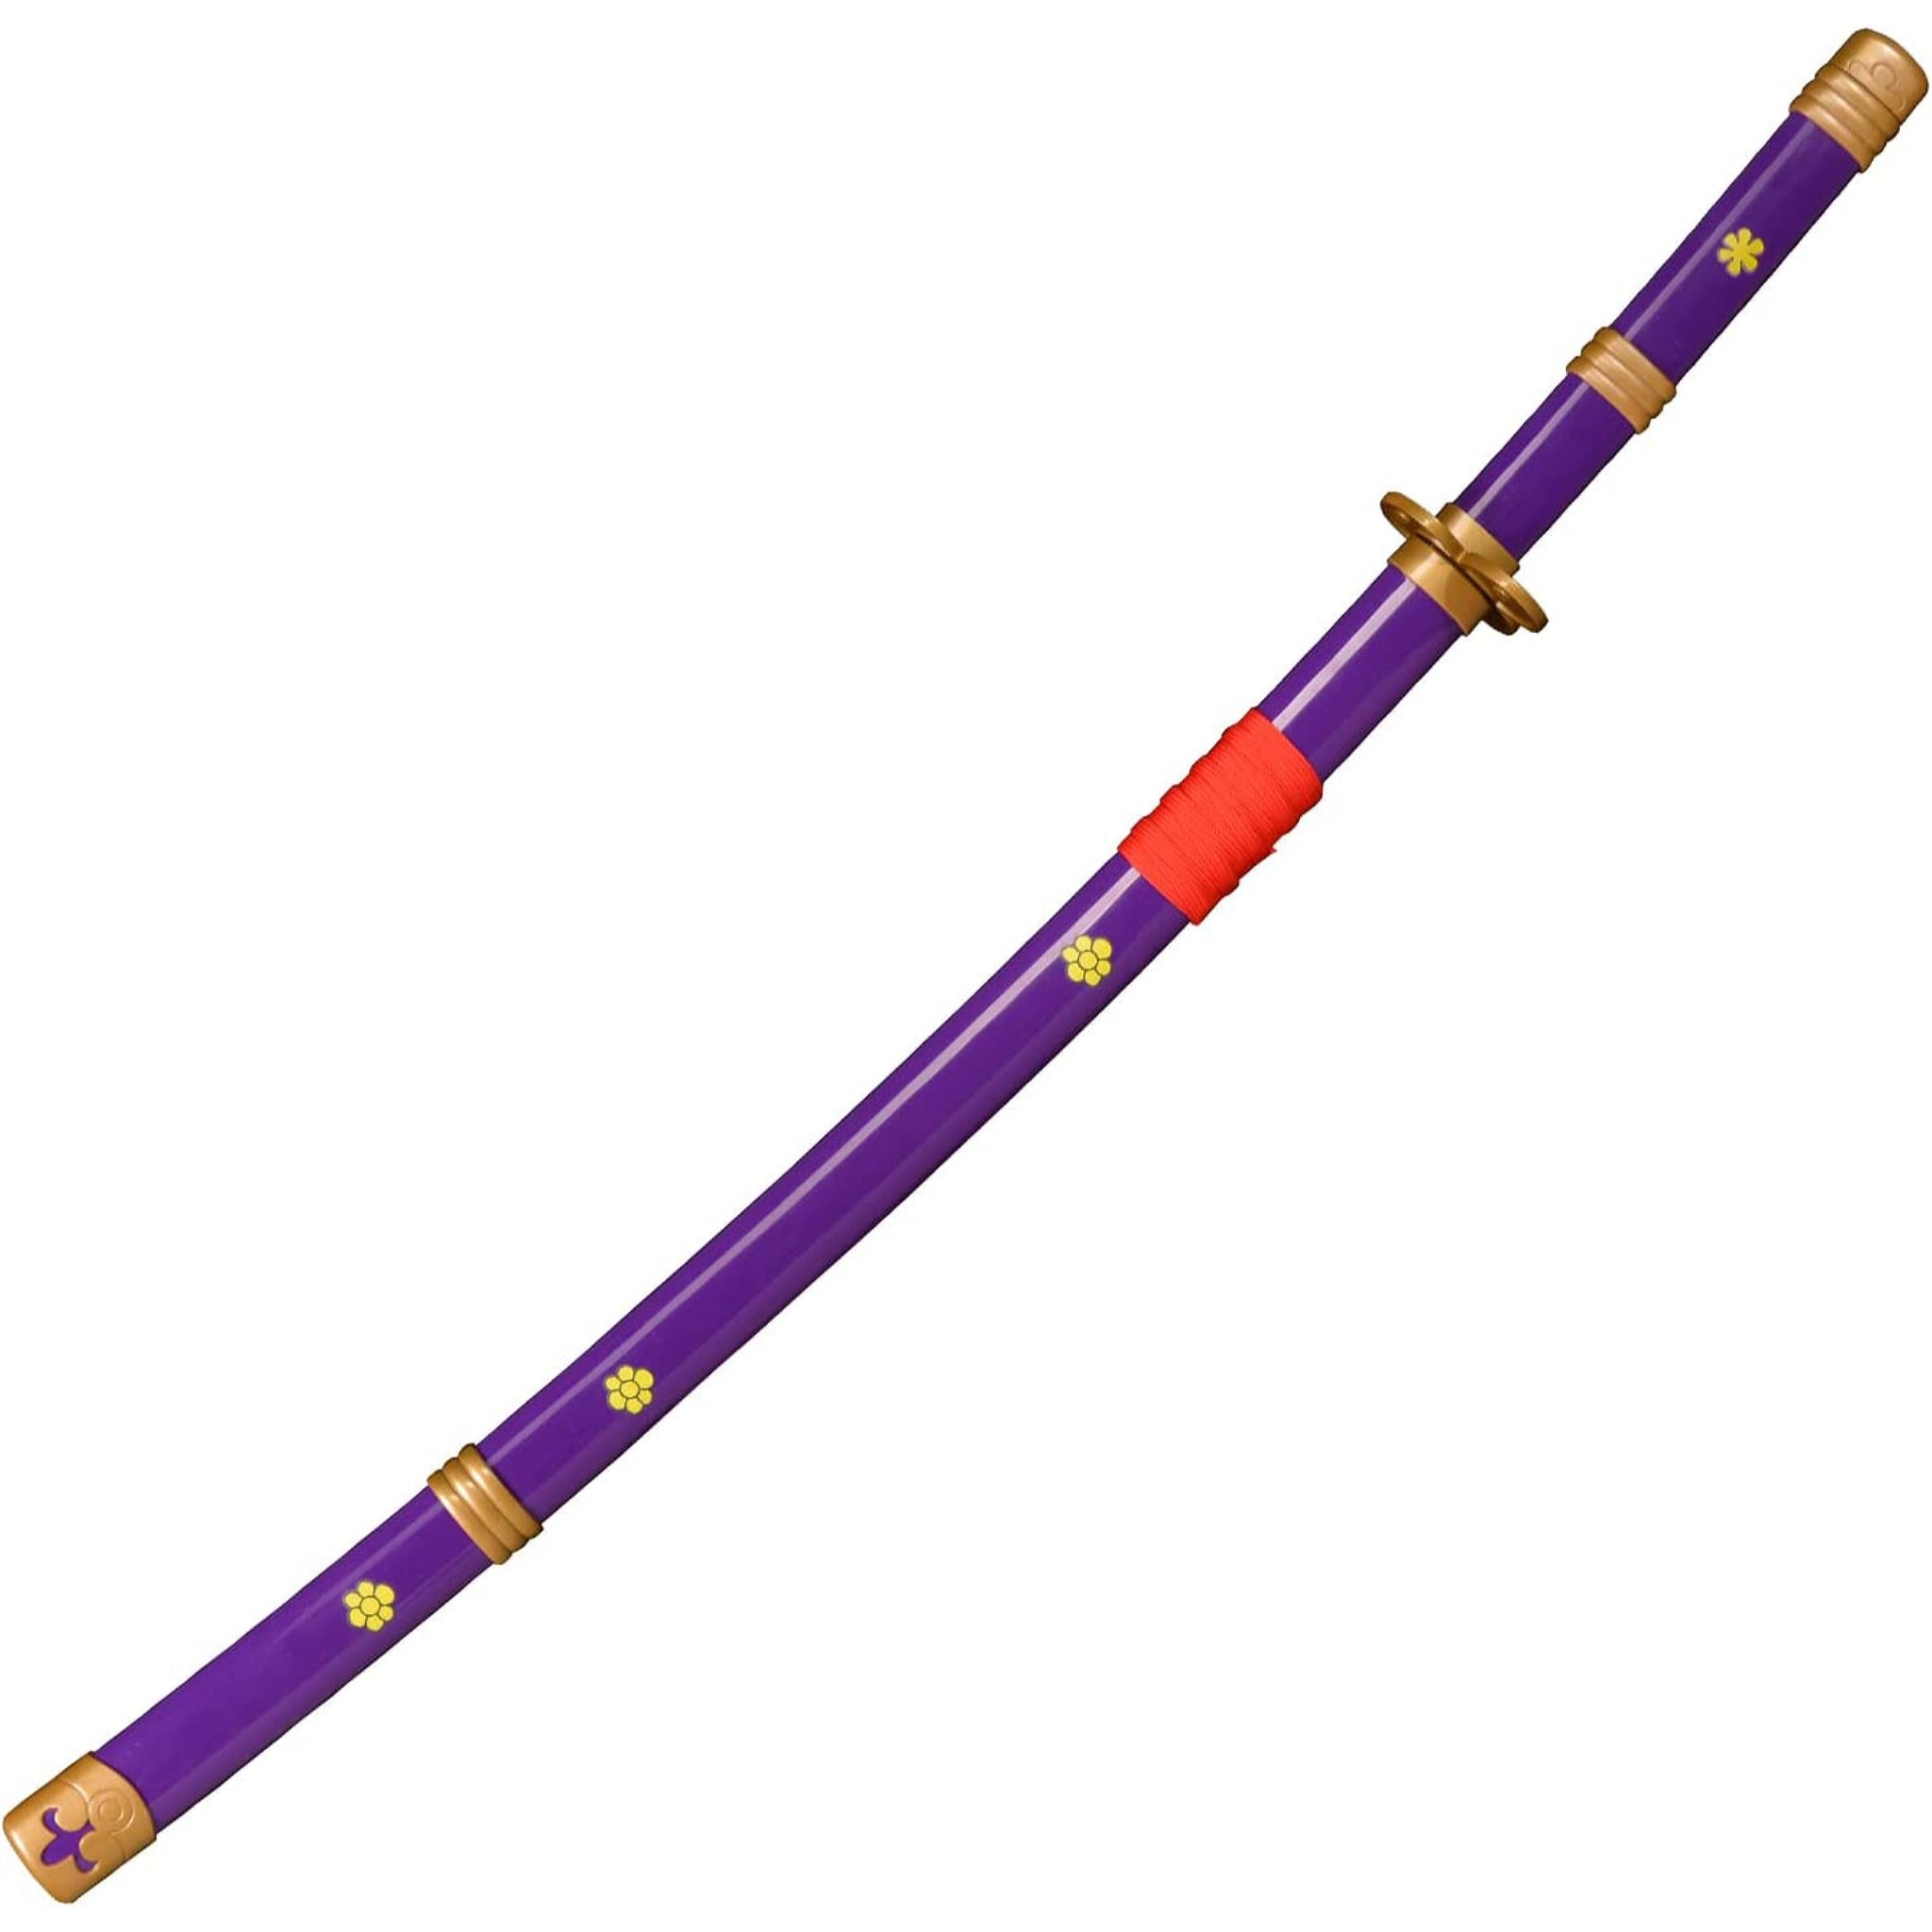 One Piece Roronoa Zoro Enma Purple Katana Wooden Cosplay Sword Variant 1